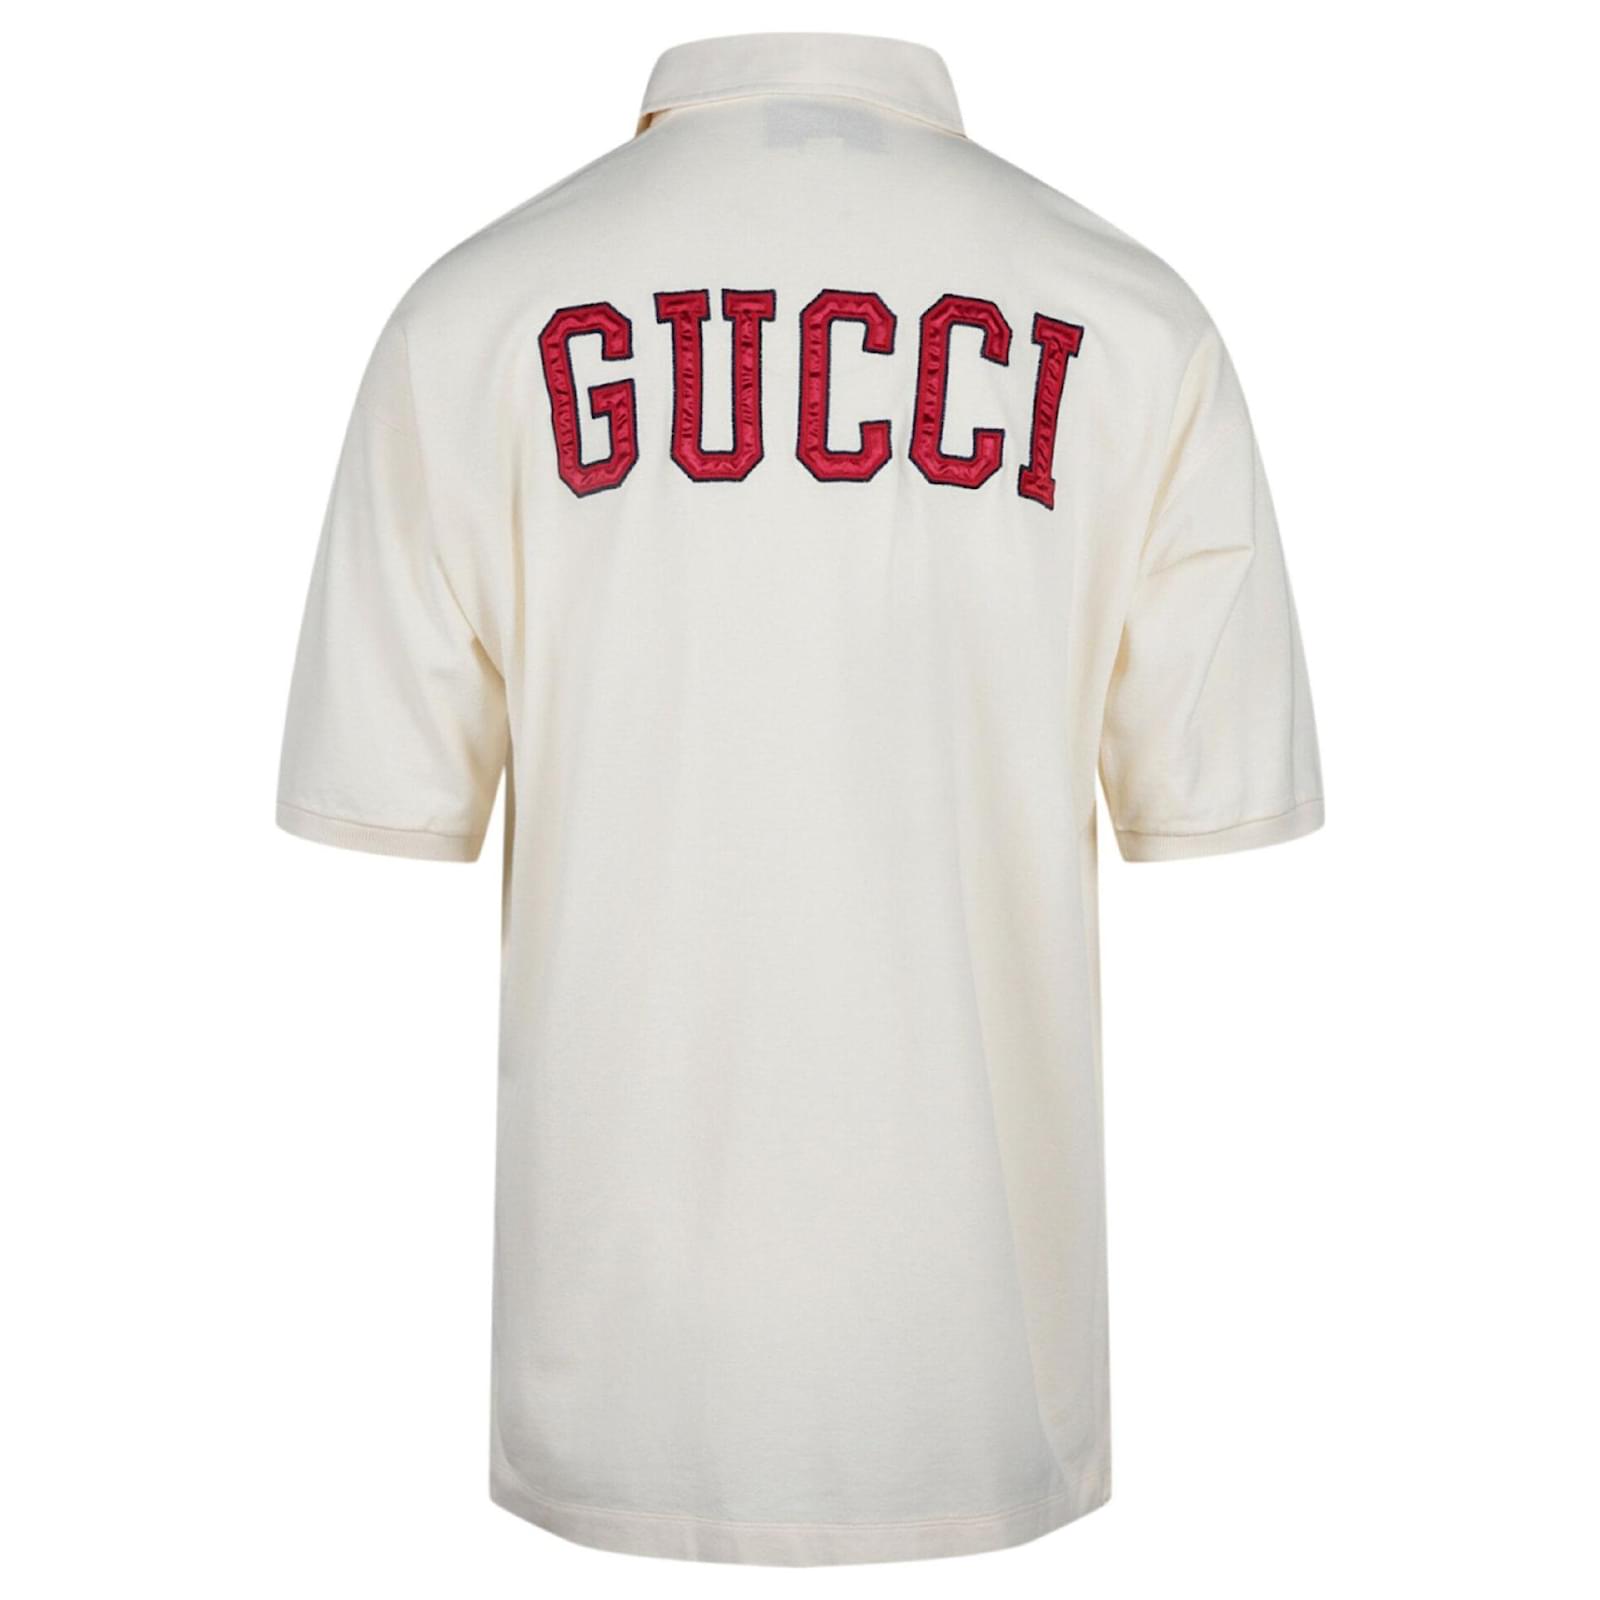 Gucci Yankees Polo